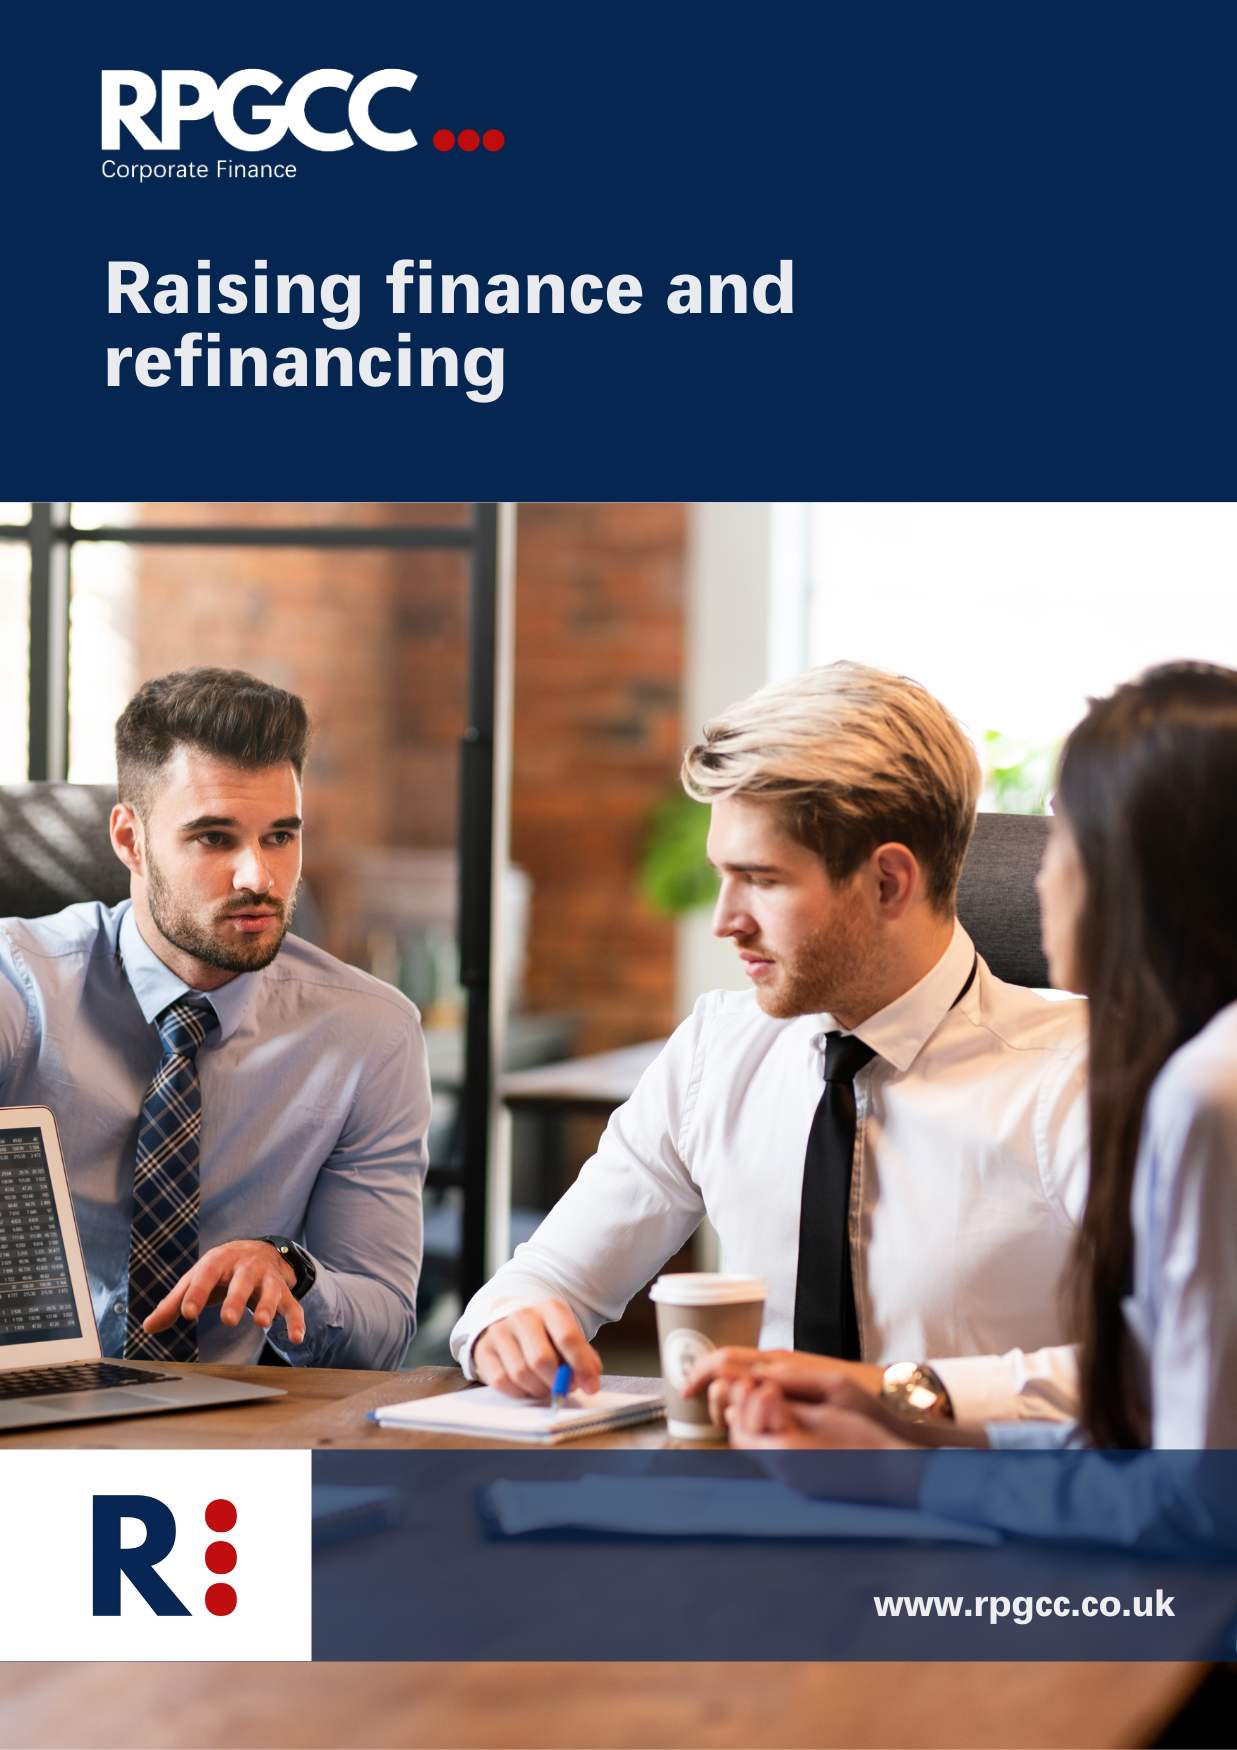 Financing and refinancing